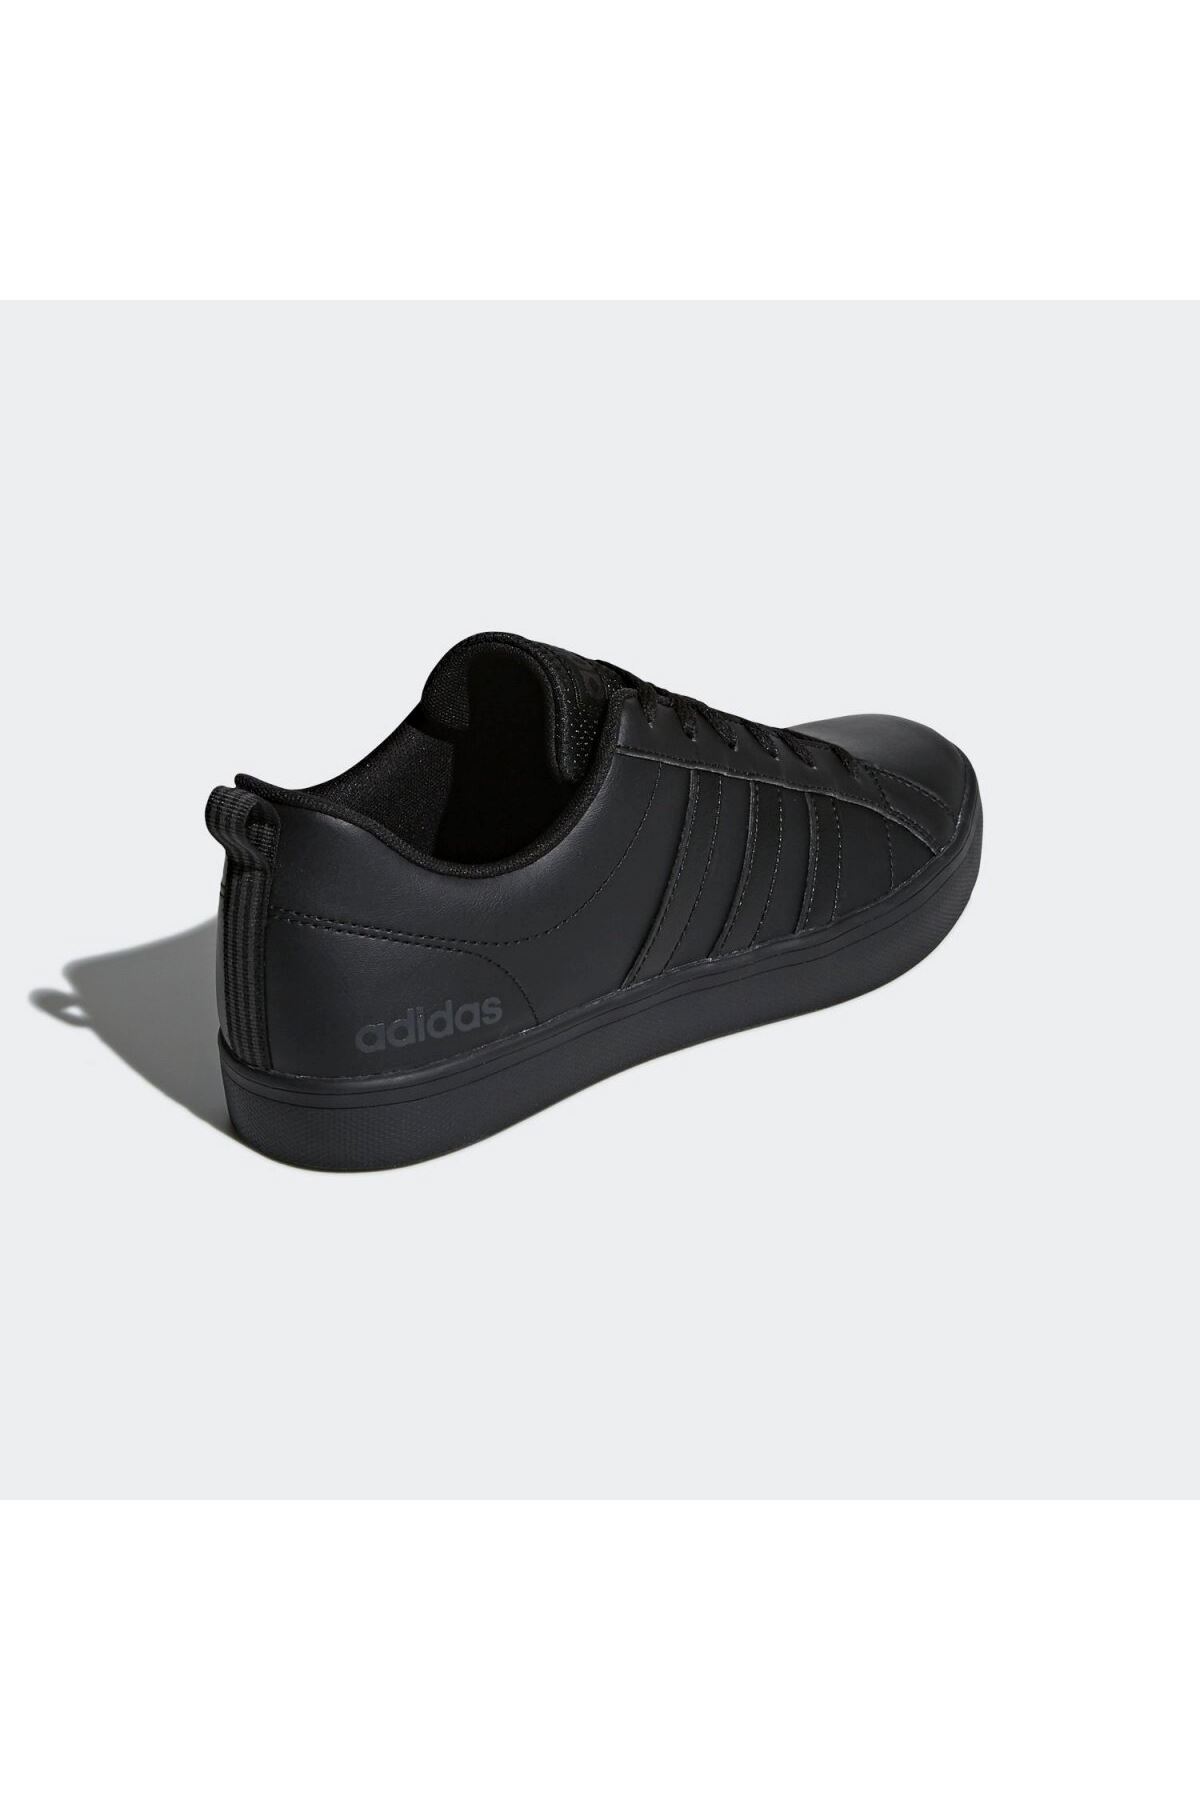 Adidas Vs Pace Erkek Siyah Spor Ayakkabı - B44869